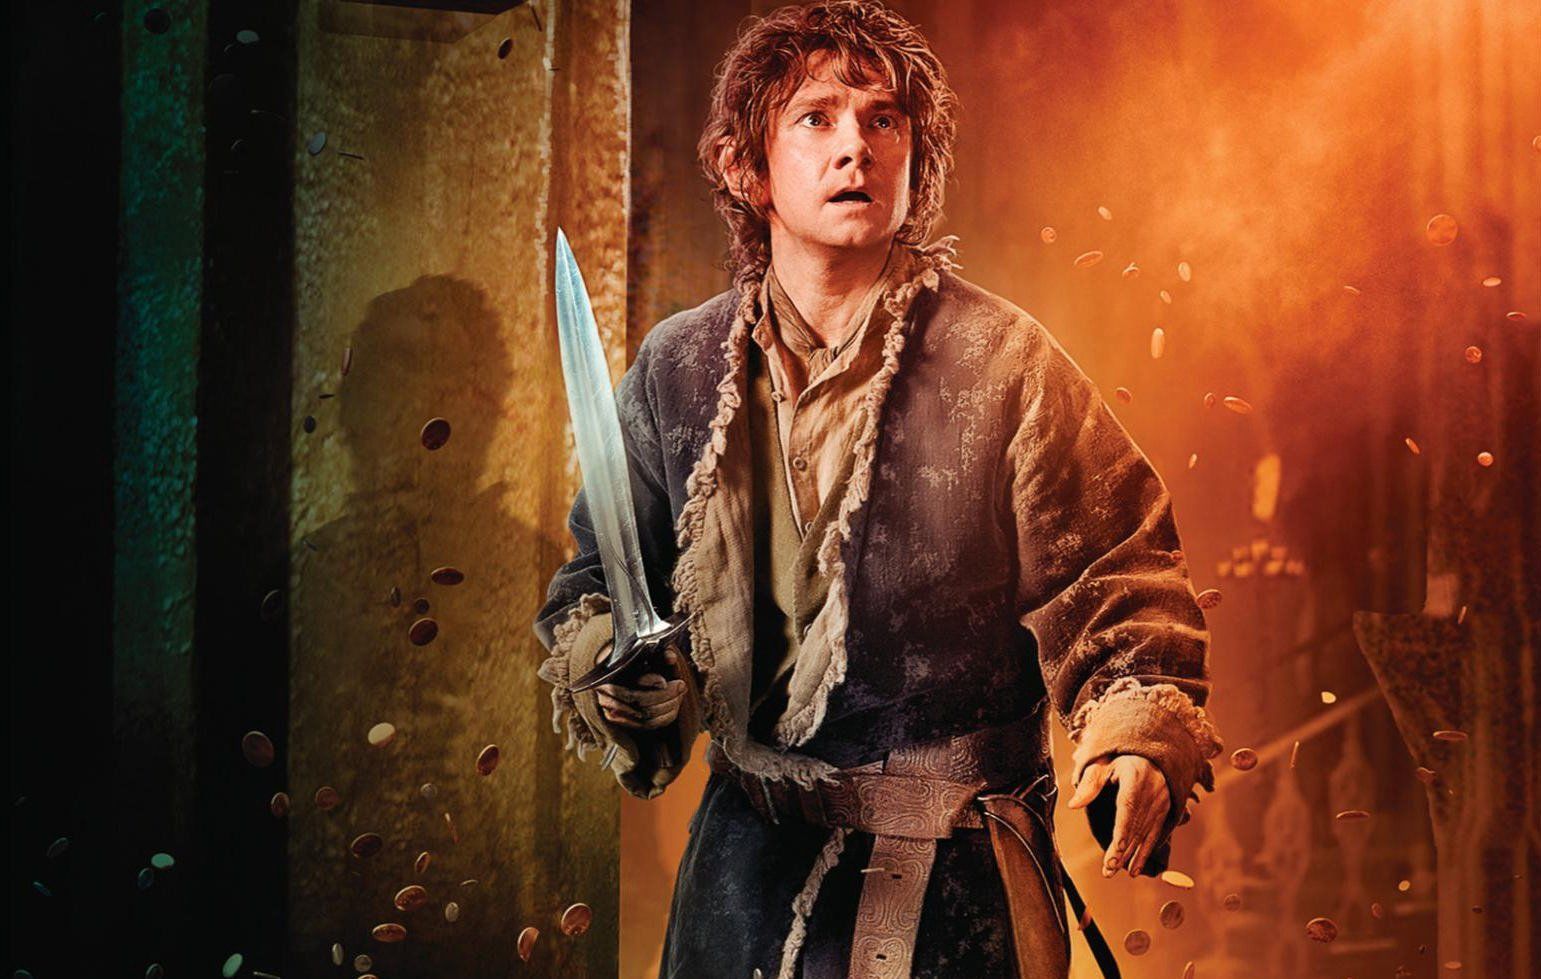 Hobbit LOTR box cover via Warner Bros site 2019